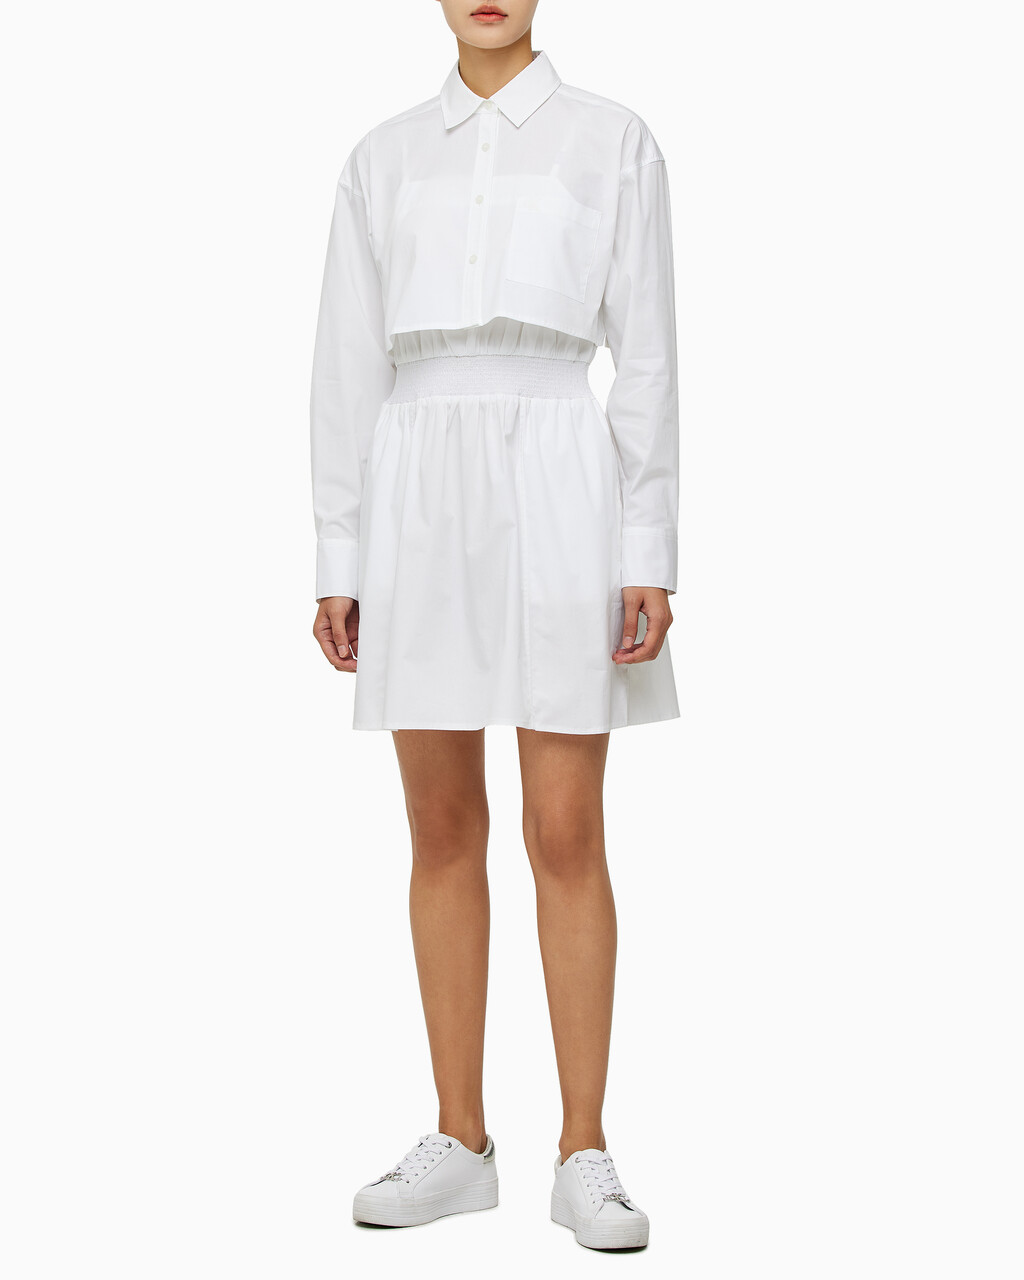 Buy 여성 로고 셔츠 드레스 in color BRIGHT WHITE